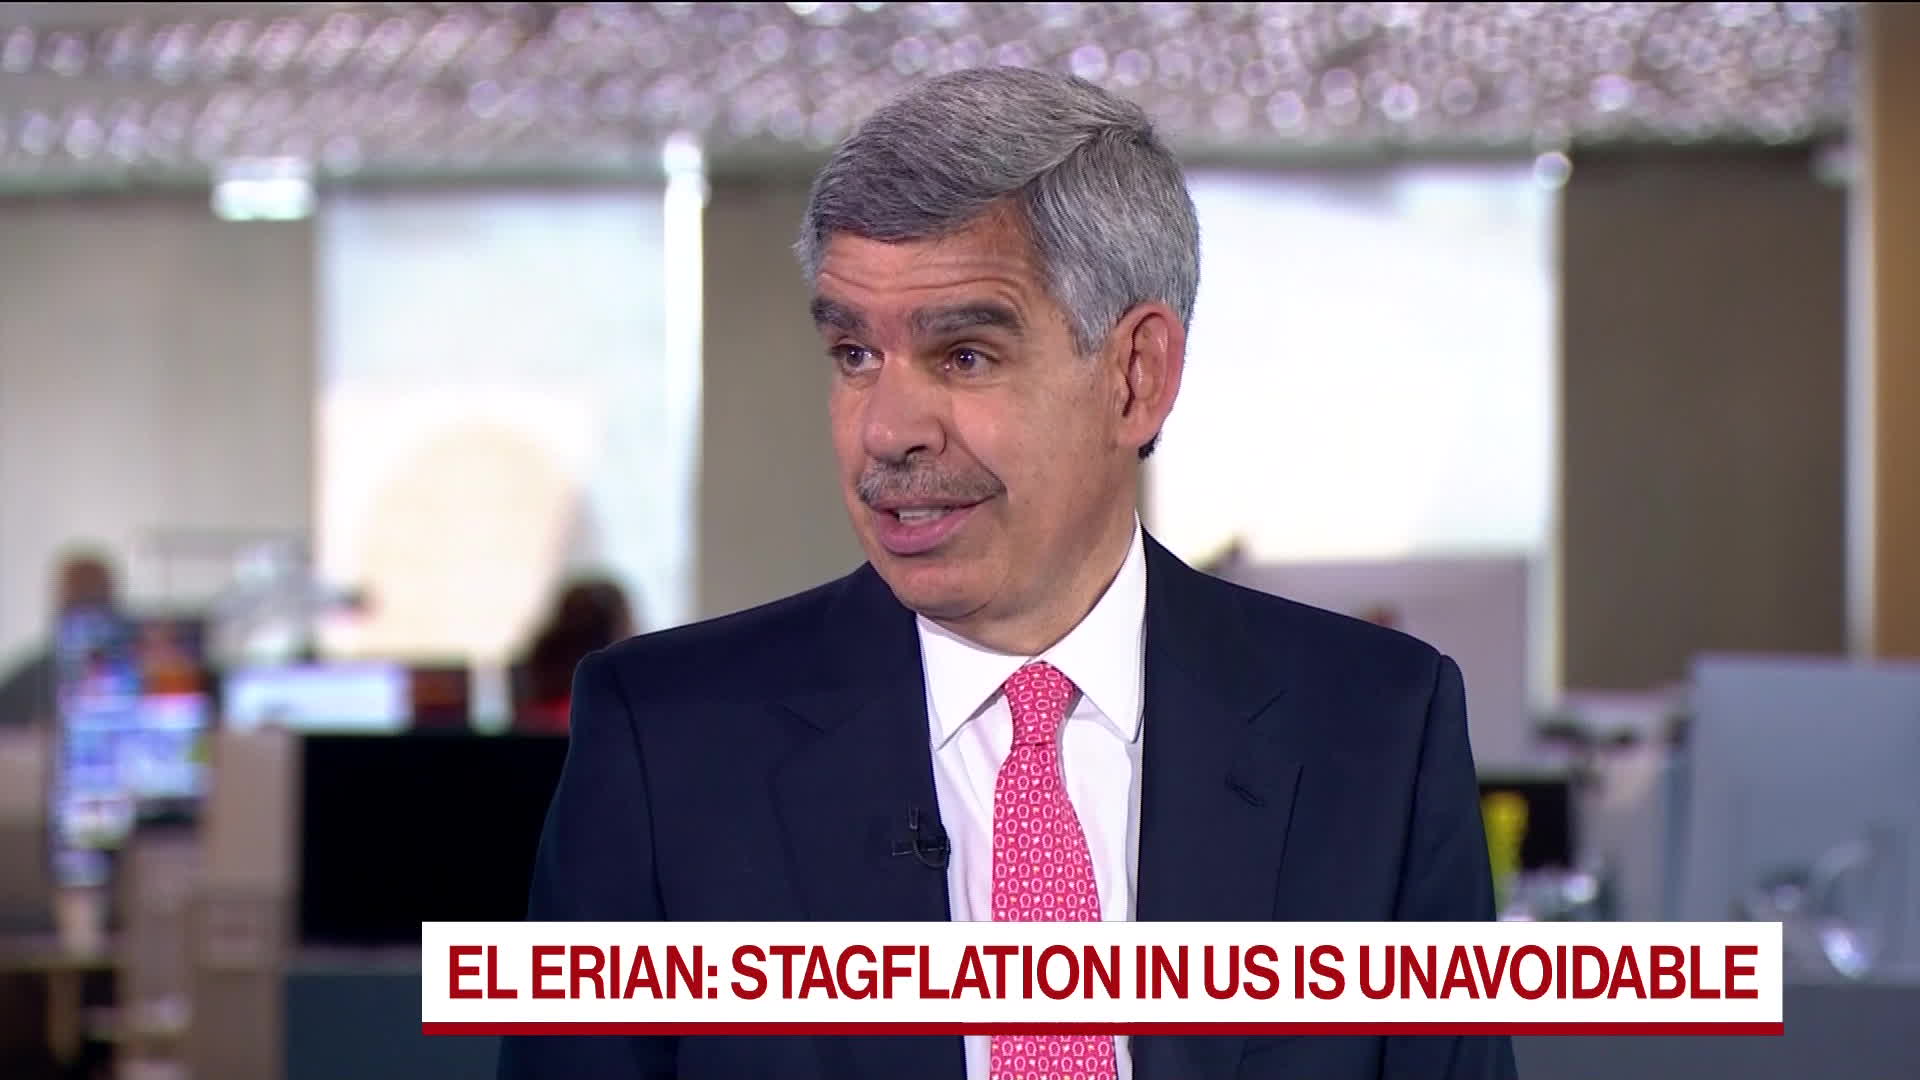 El-Erian Says US Stagflation Is ‘Unavoidable’